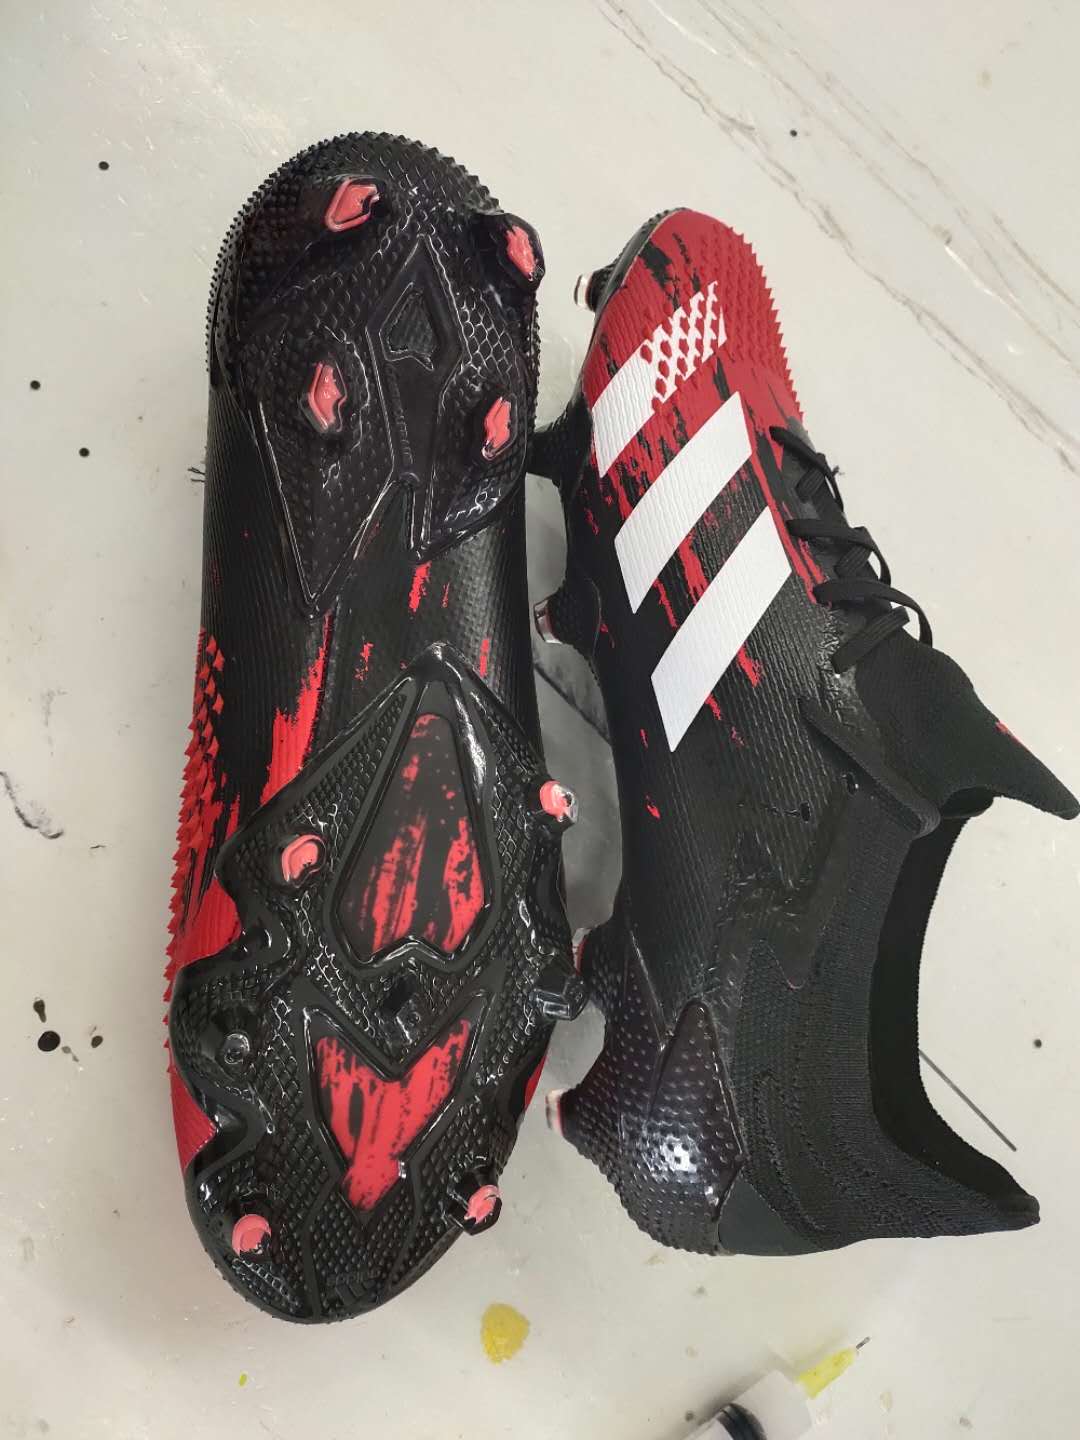 Adidas PREDATOR MUTATOR 20.1 L FG Firm Ground 'Black Red' EF2206 | Pro-Level Soccer Cleats